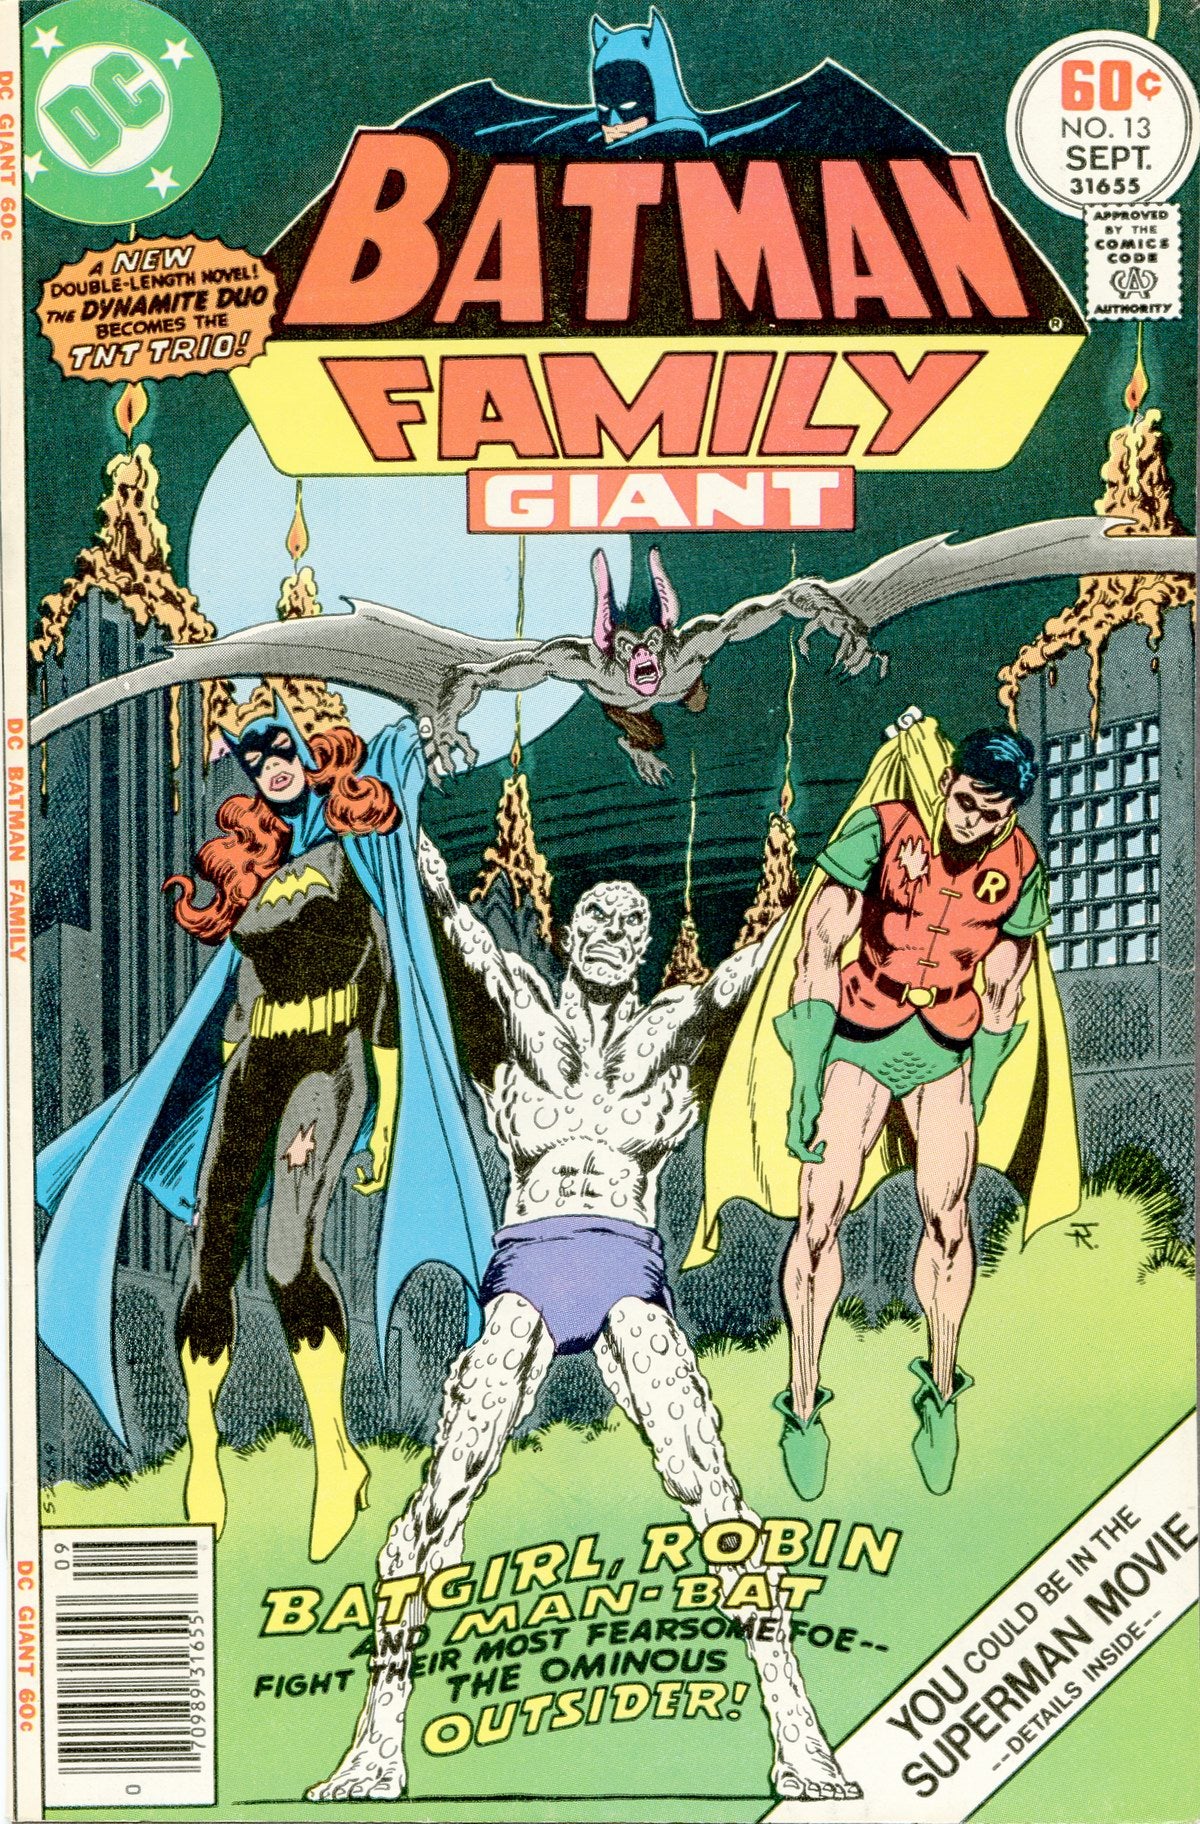 Batman Family Giant #13